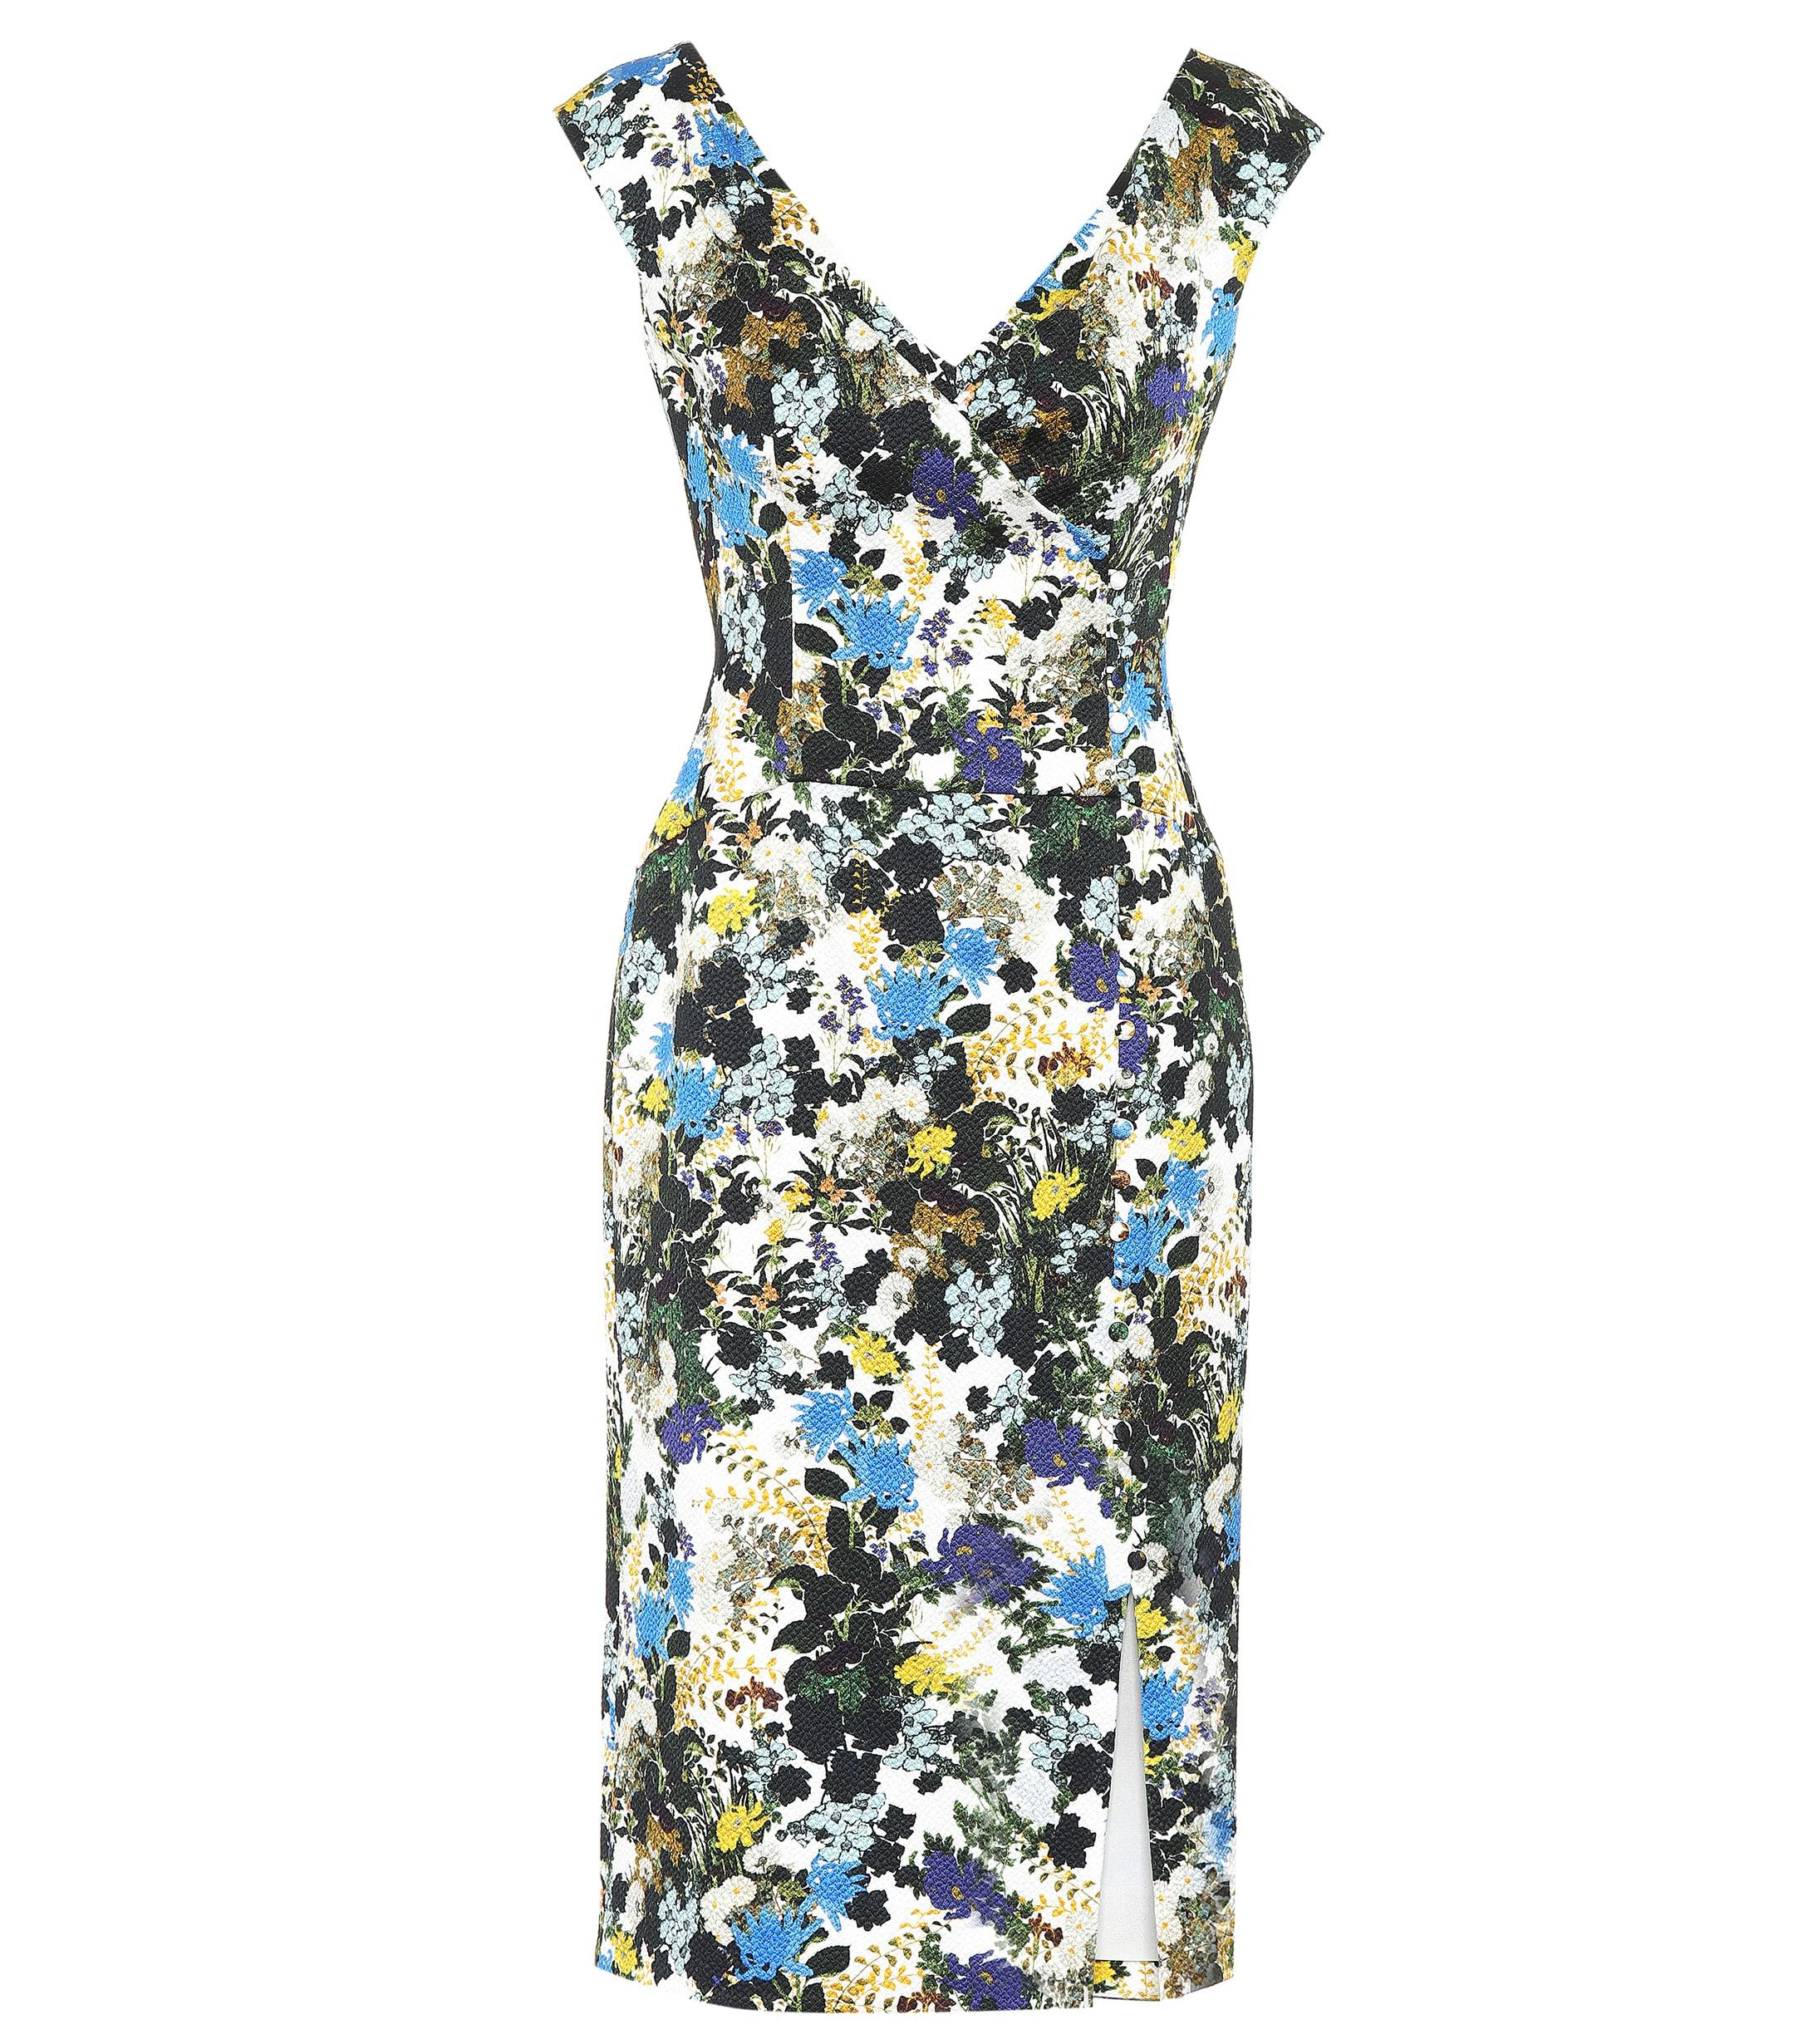 Erdem Cotton-blend Floral Dress in White/Blue (Blue) - Lyst